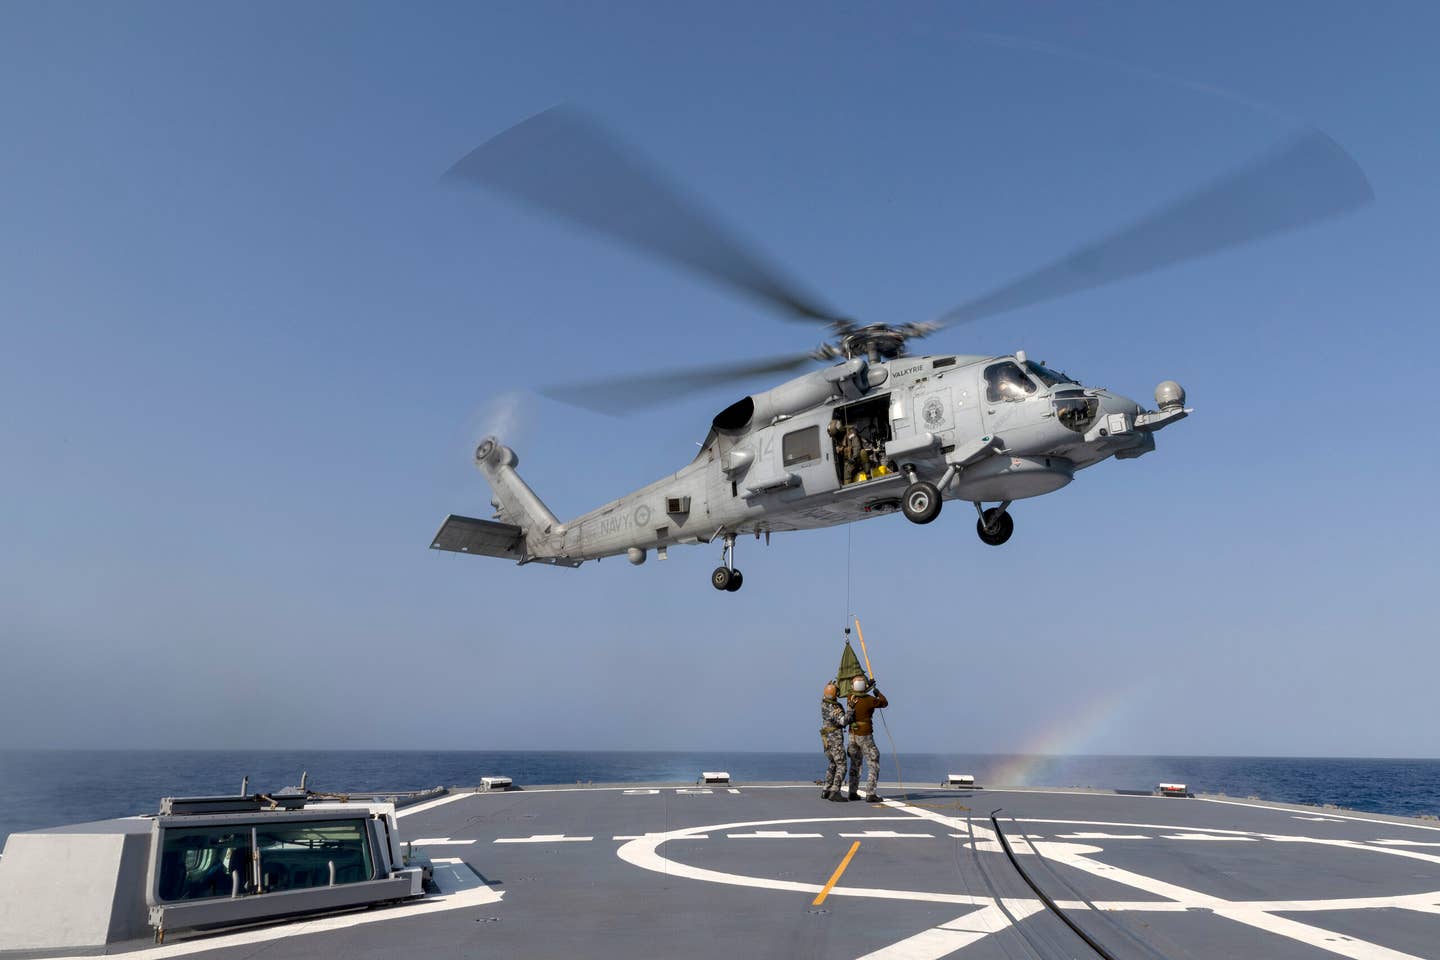 Royal Australian Navy sailors conduct a high-line transfer exercise with an embarked MH-60R from the <em>Anzac</em> class frigate HMAS <em>Toowoomba</em>, off the coast of Western Australia. <em>COMMONWEALTH OF AUSTRALIA, DEPARTMENT OF DEFENSE</em>